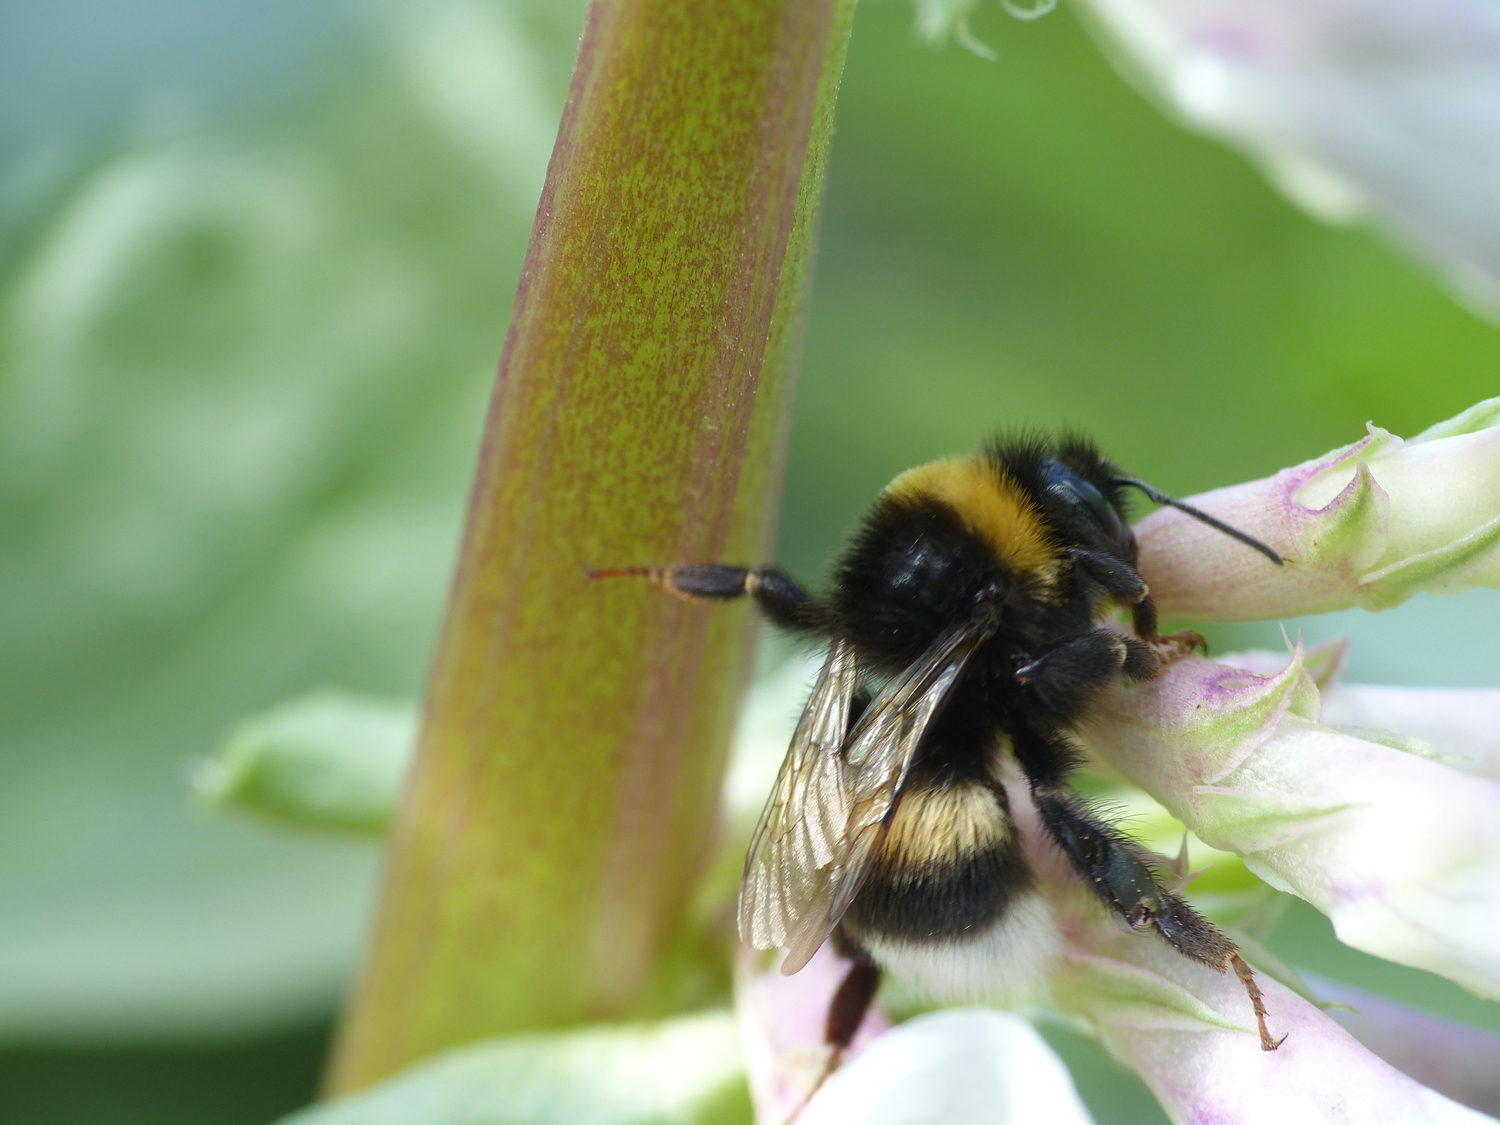 A bumblebee stealing nectar from a faba bean